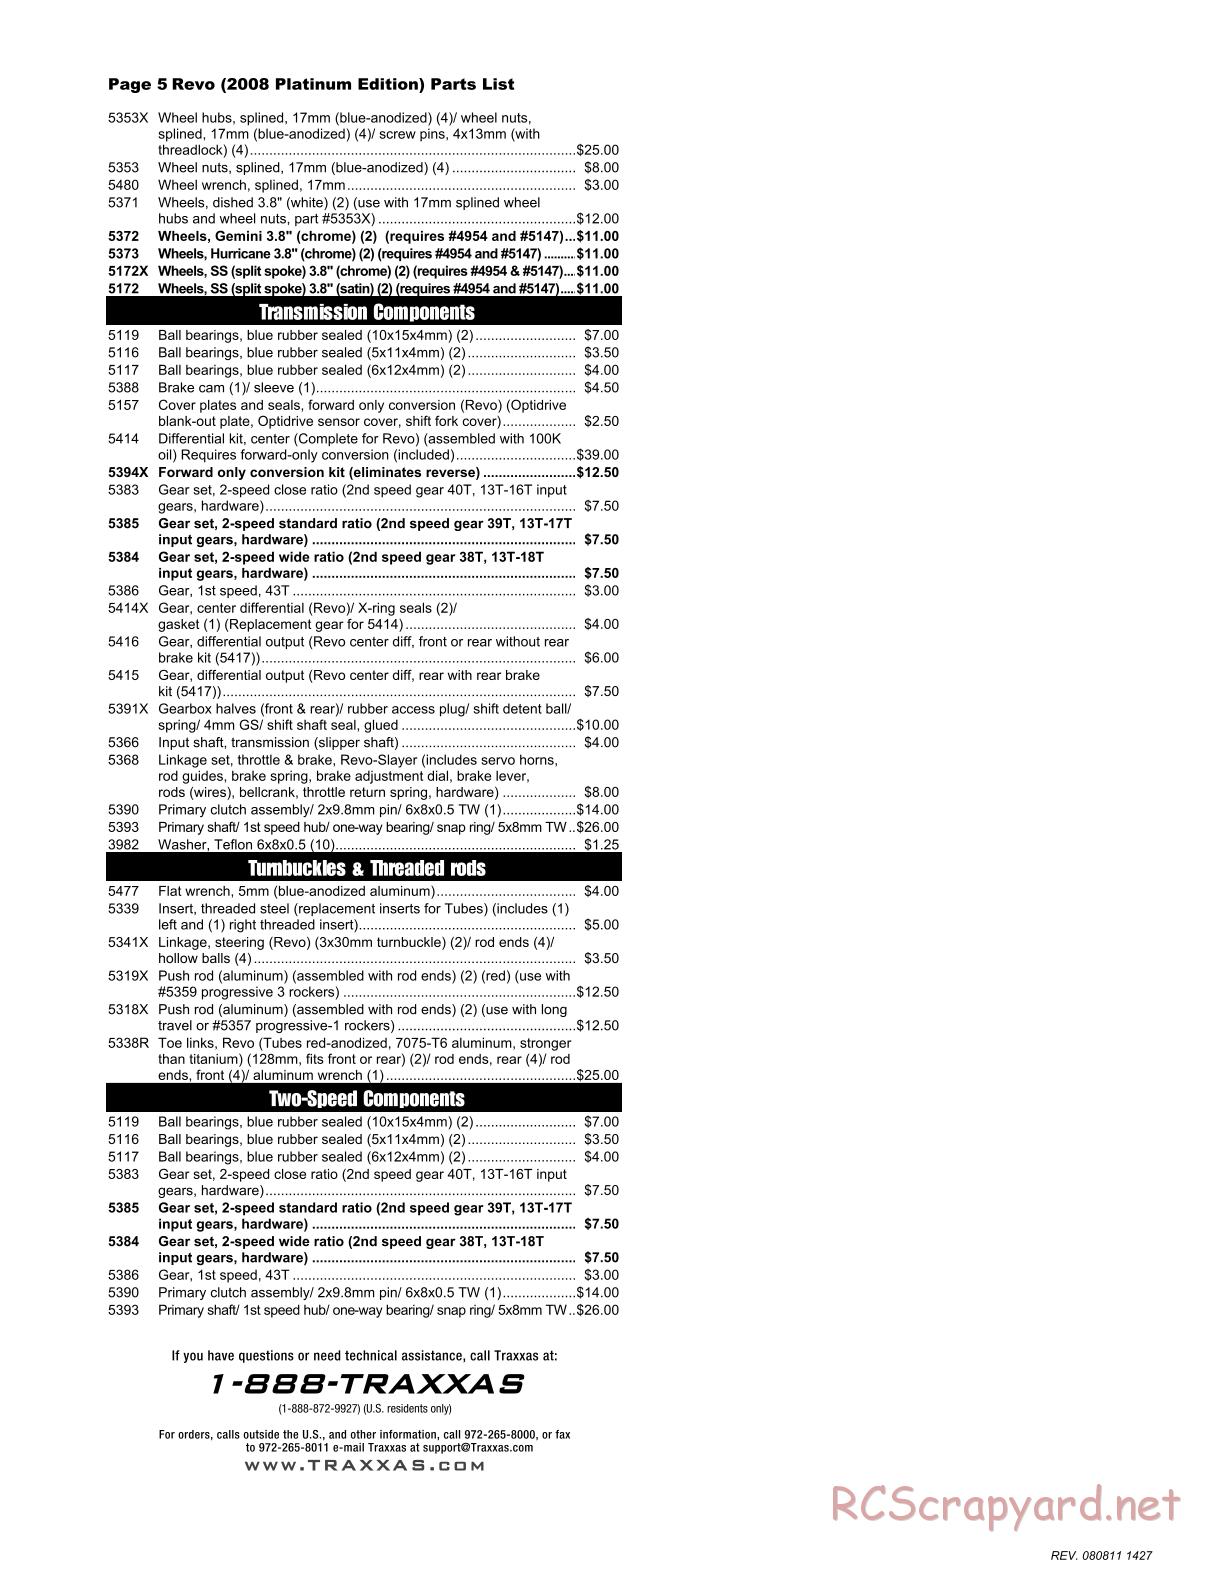 Traxxas - Revo Platinum Edition (2008) - Parts List - Page 5